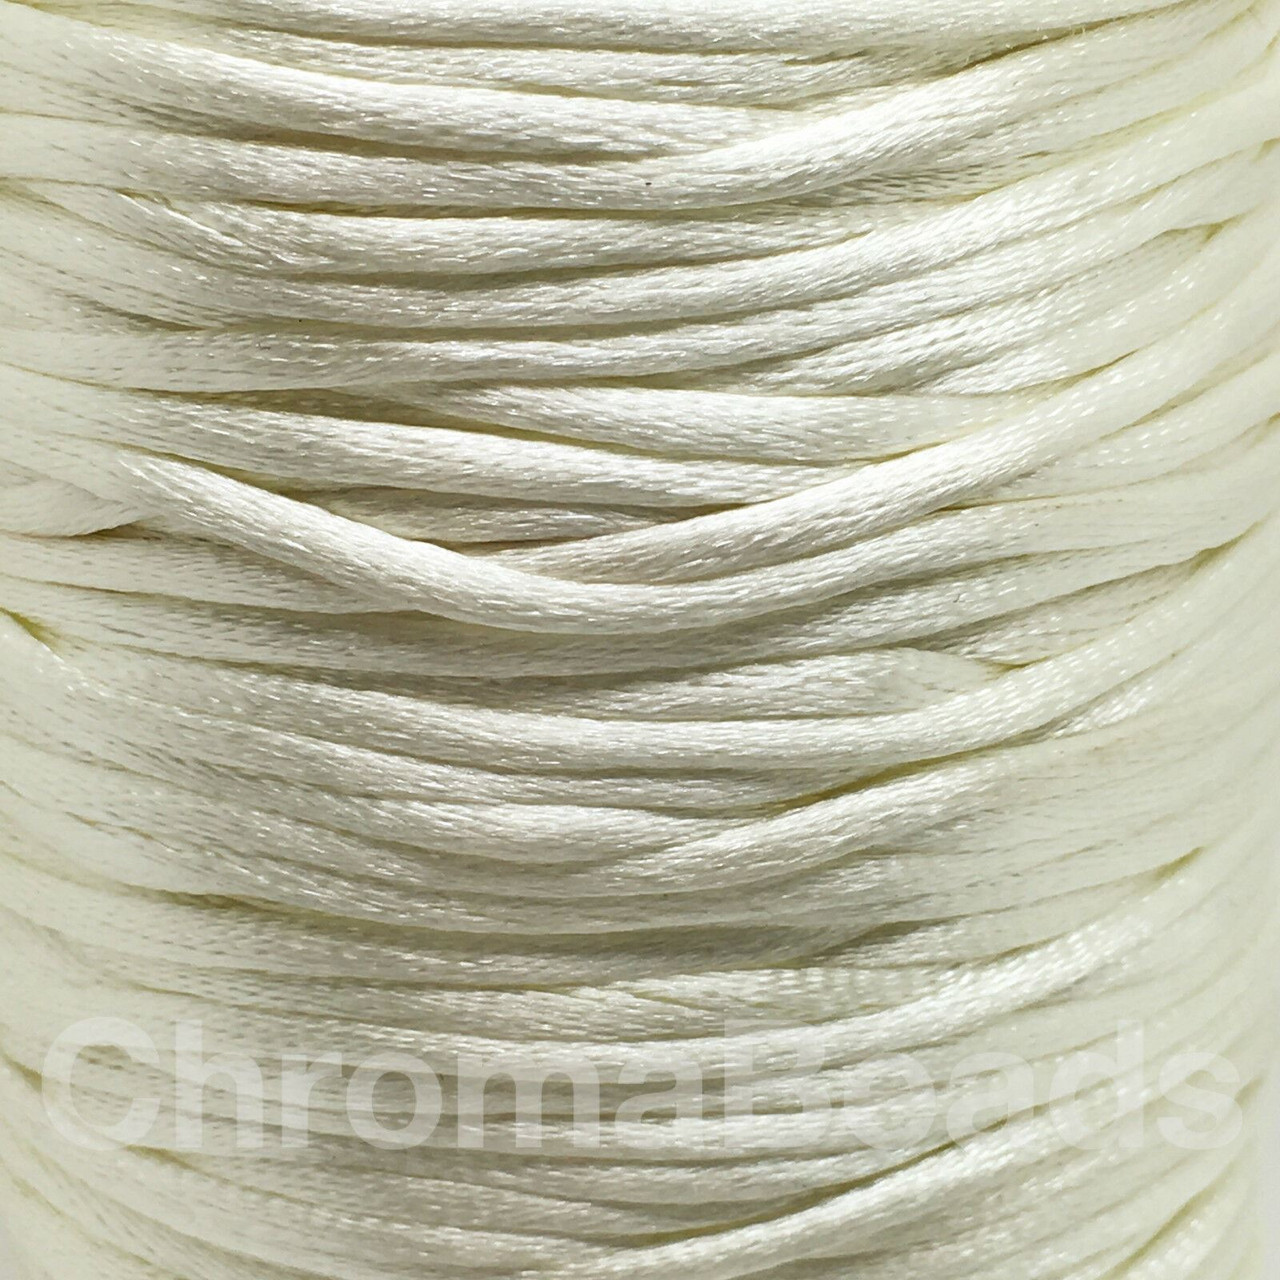 Ivory 2mm Satin rattail cord